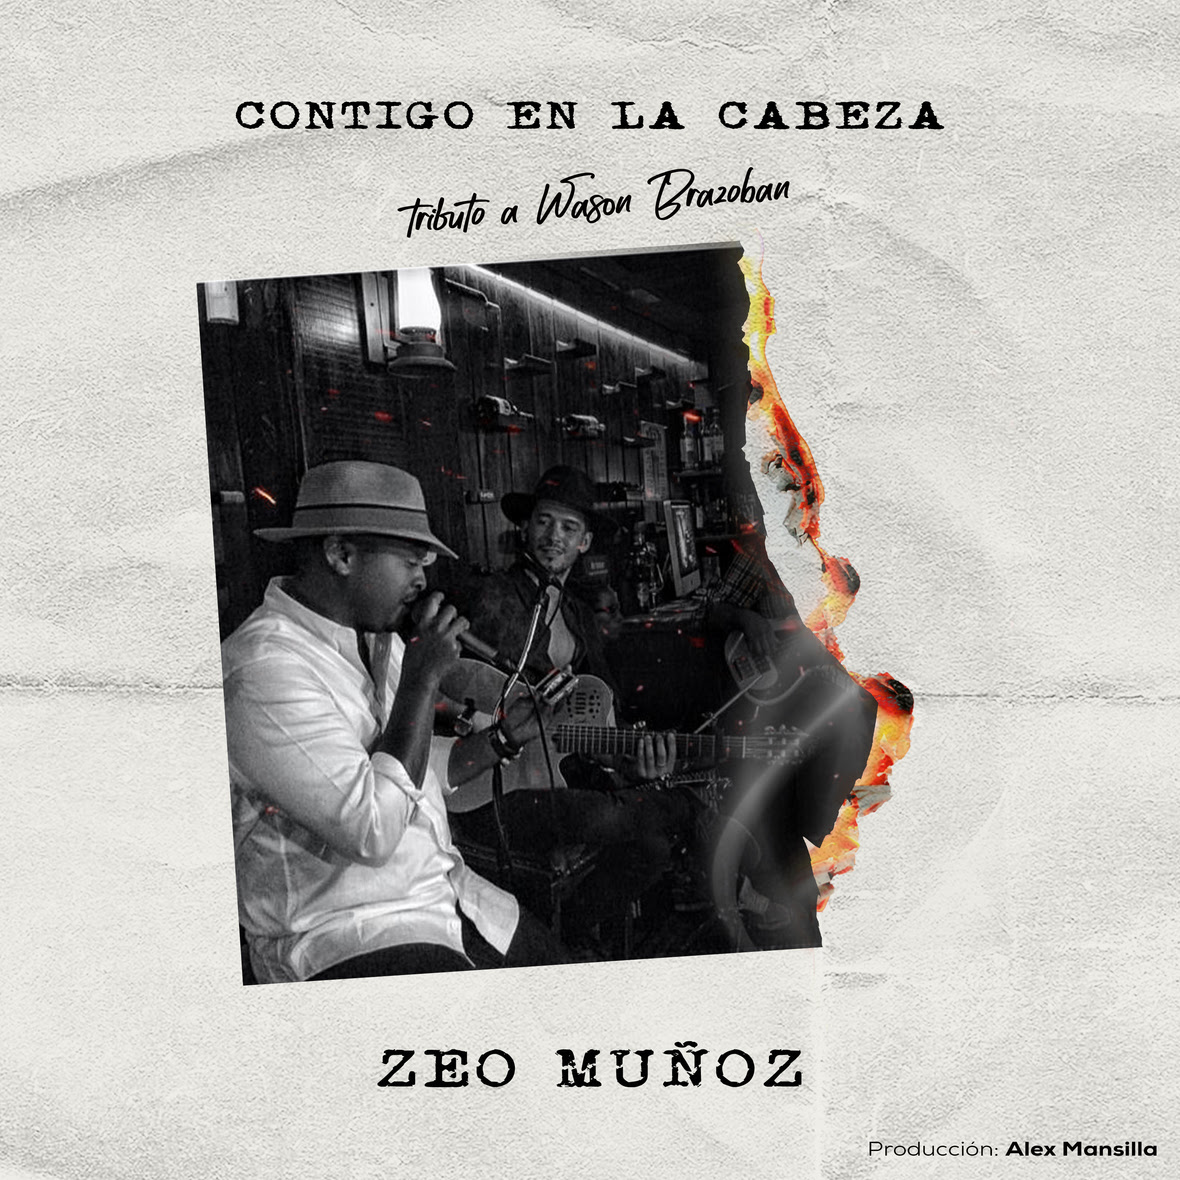 Zeo Munoz - Tributo a wason 1 